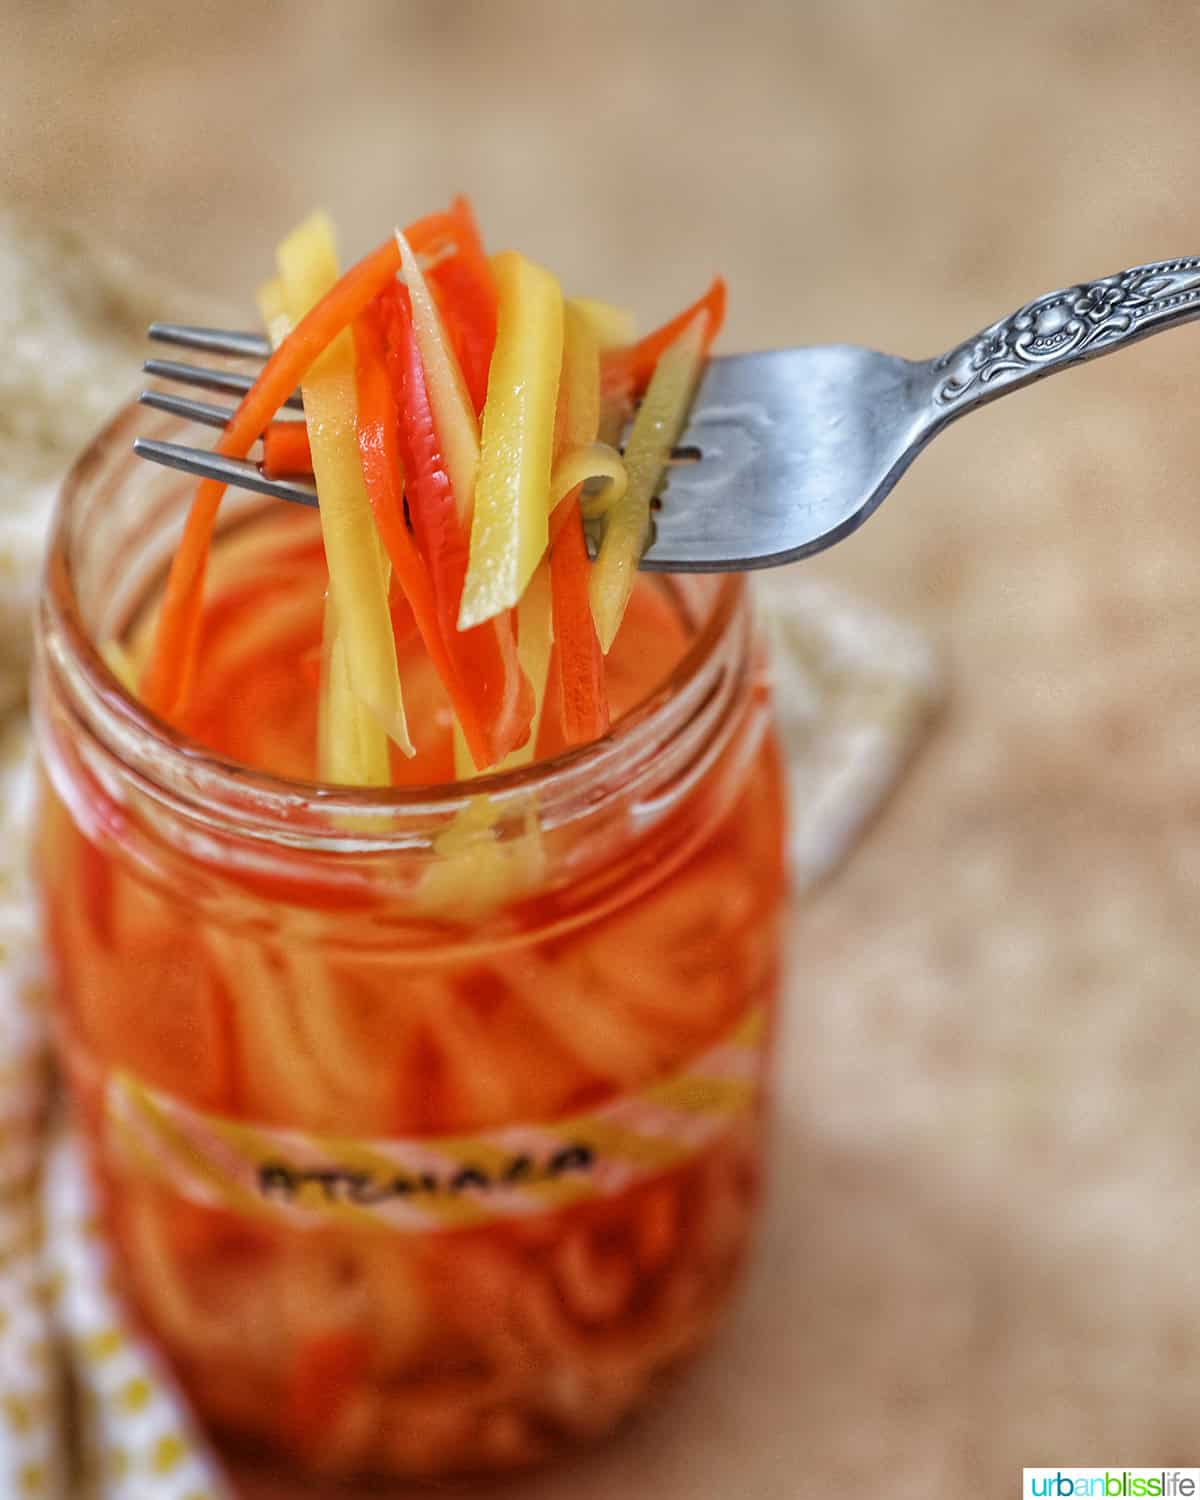 forkful of Filipino atchara condiment - papaya, carrots, red bell pepper, garlic, ginger - over a mason jar.